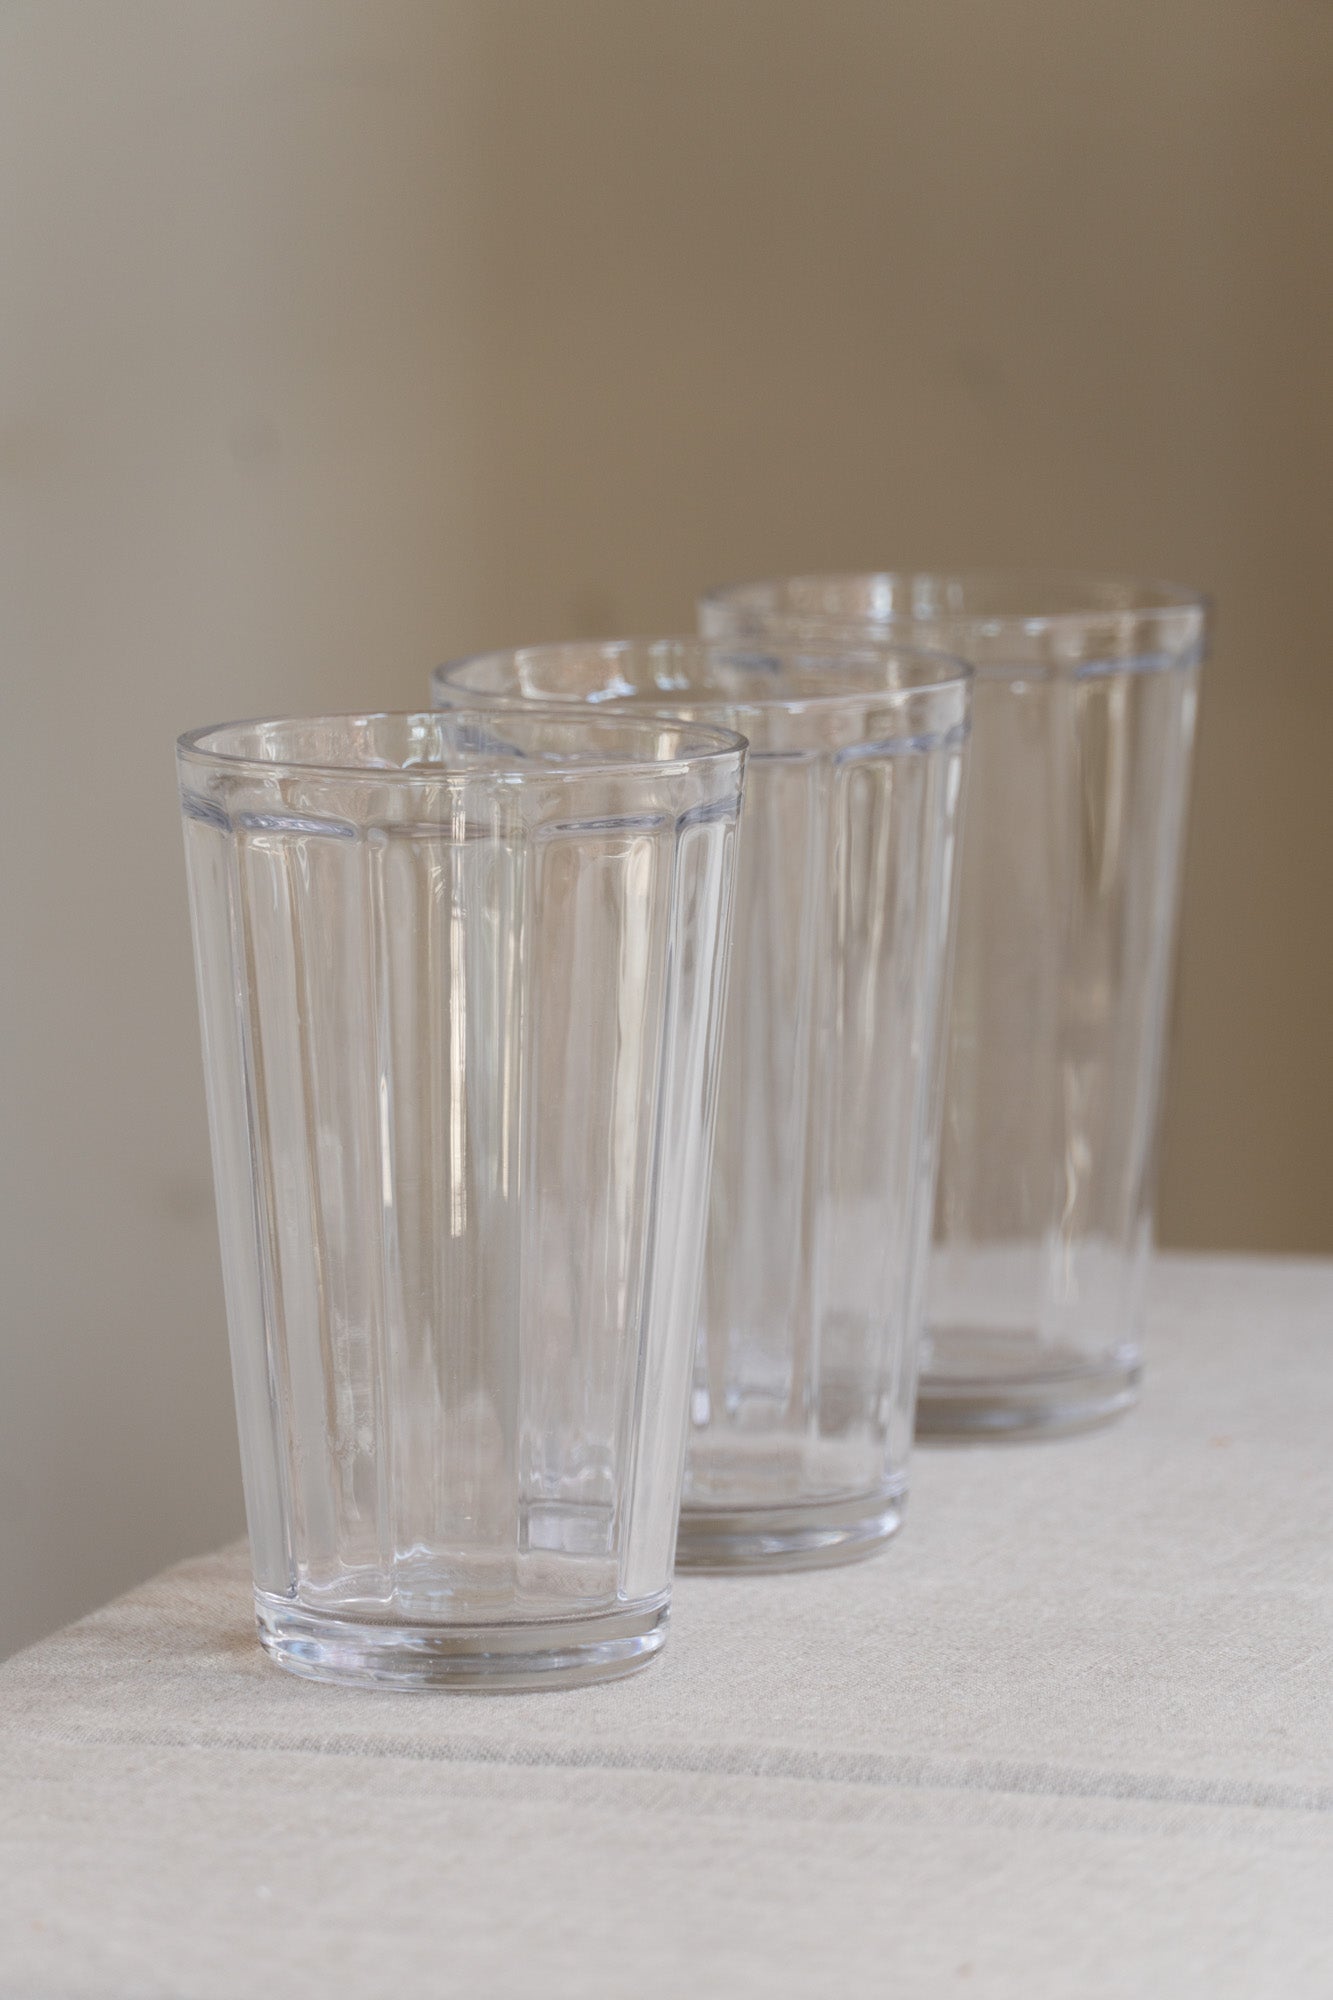 Highball Beverage Glass - Italian Made (Set of 4)